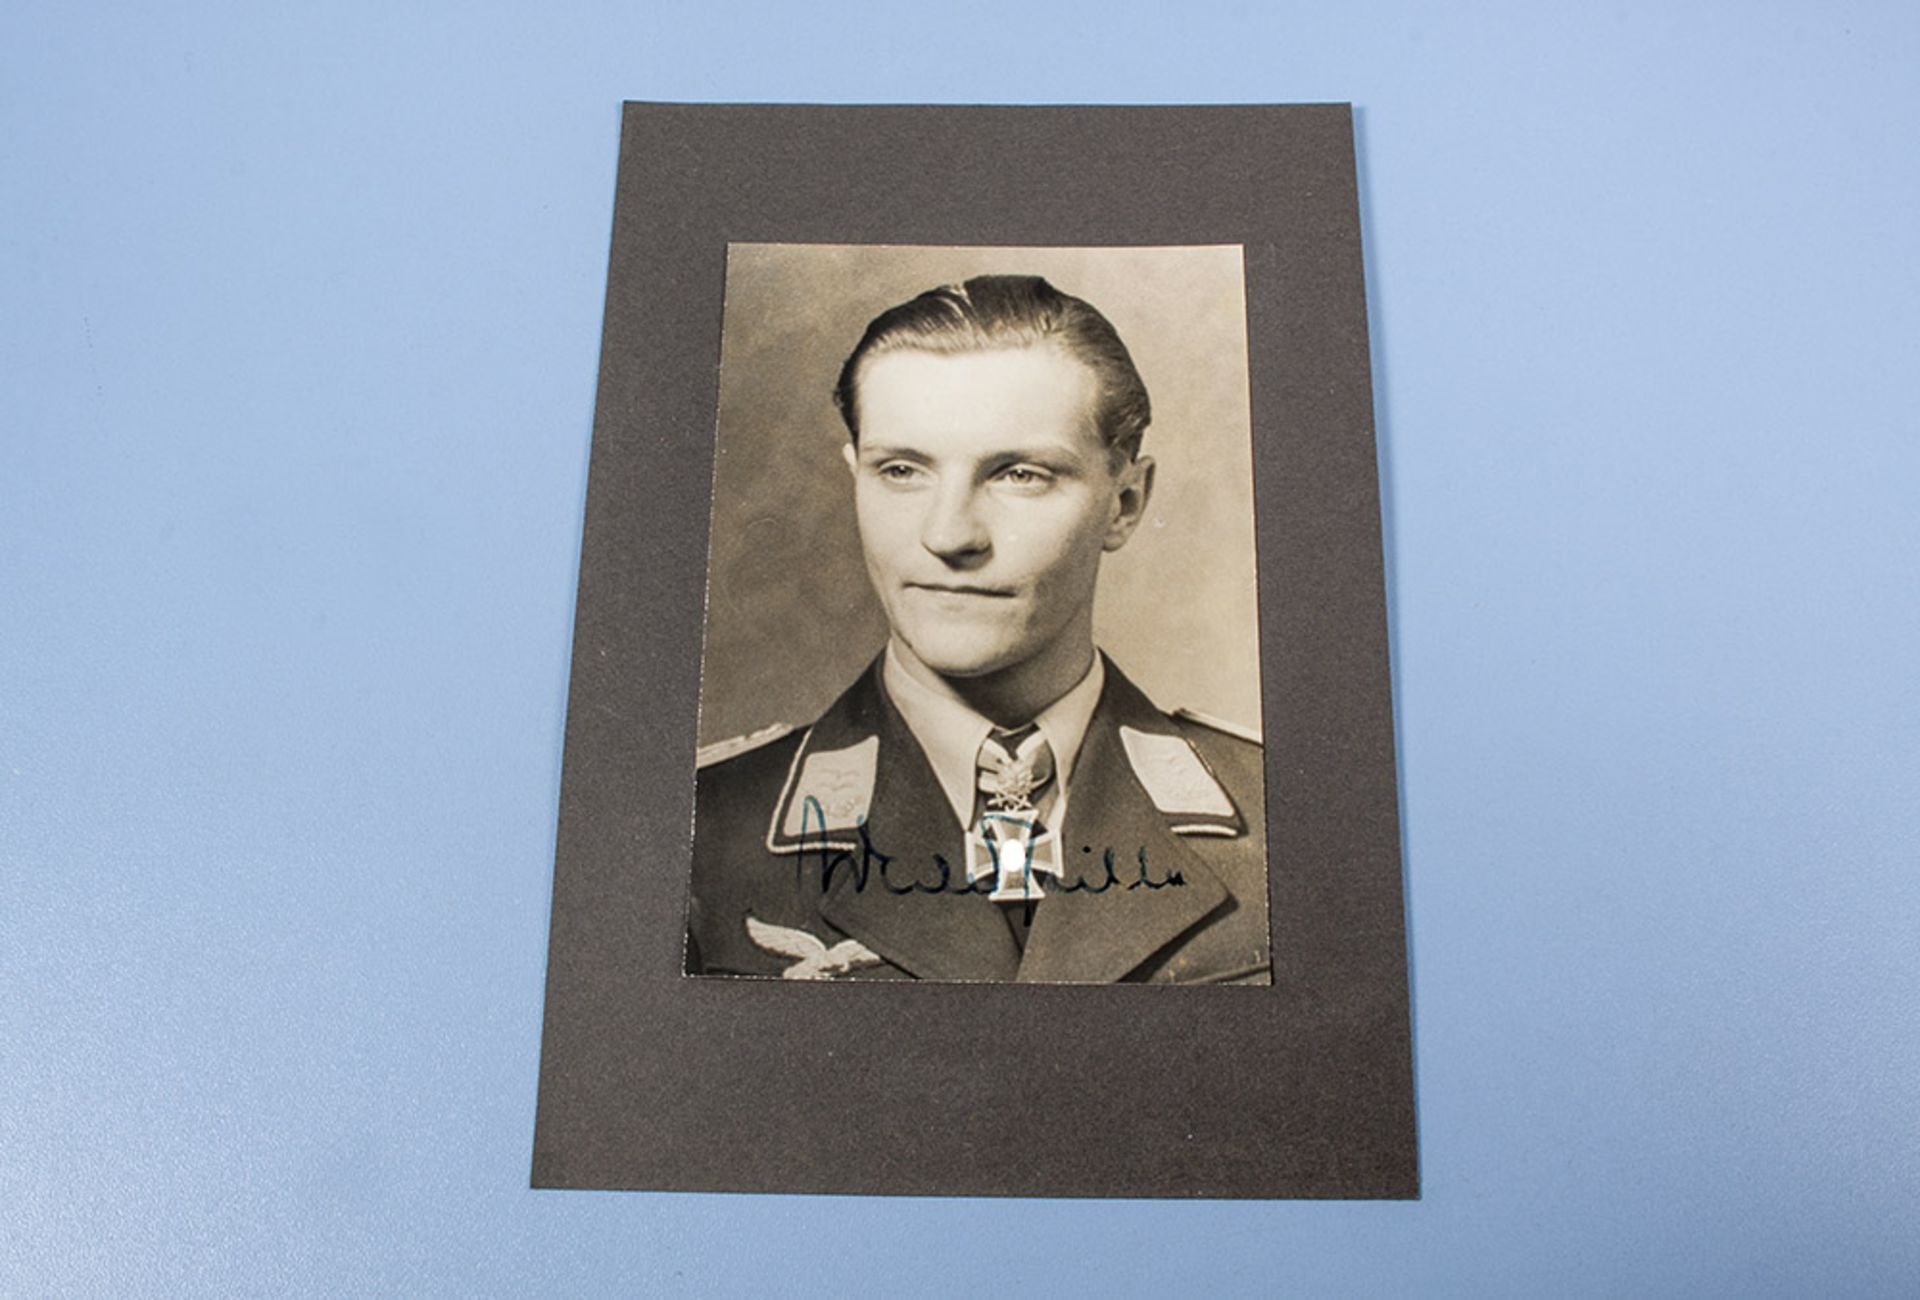 Ritterkreuzträgerfoto in Postkartengröße mit OU des Brillantenträgers Oberleutnant ...